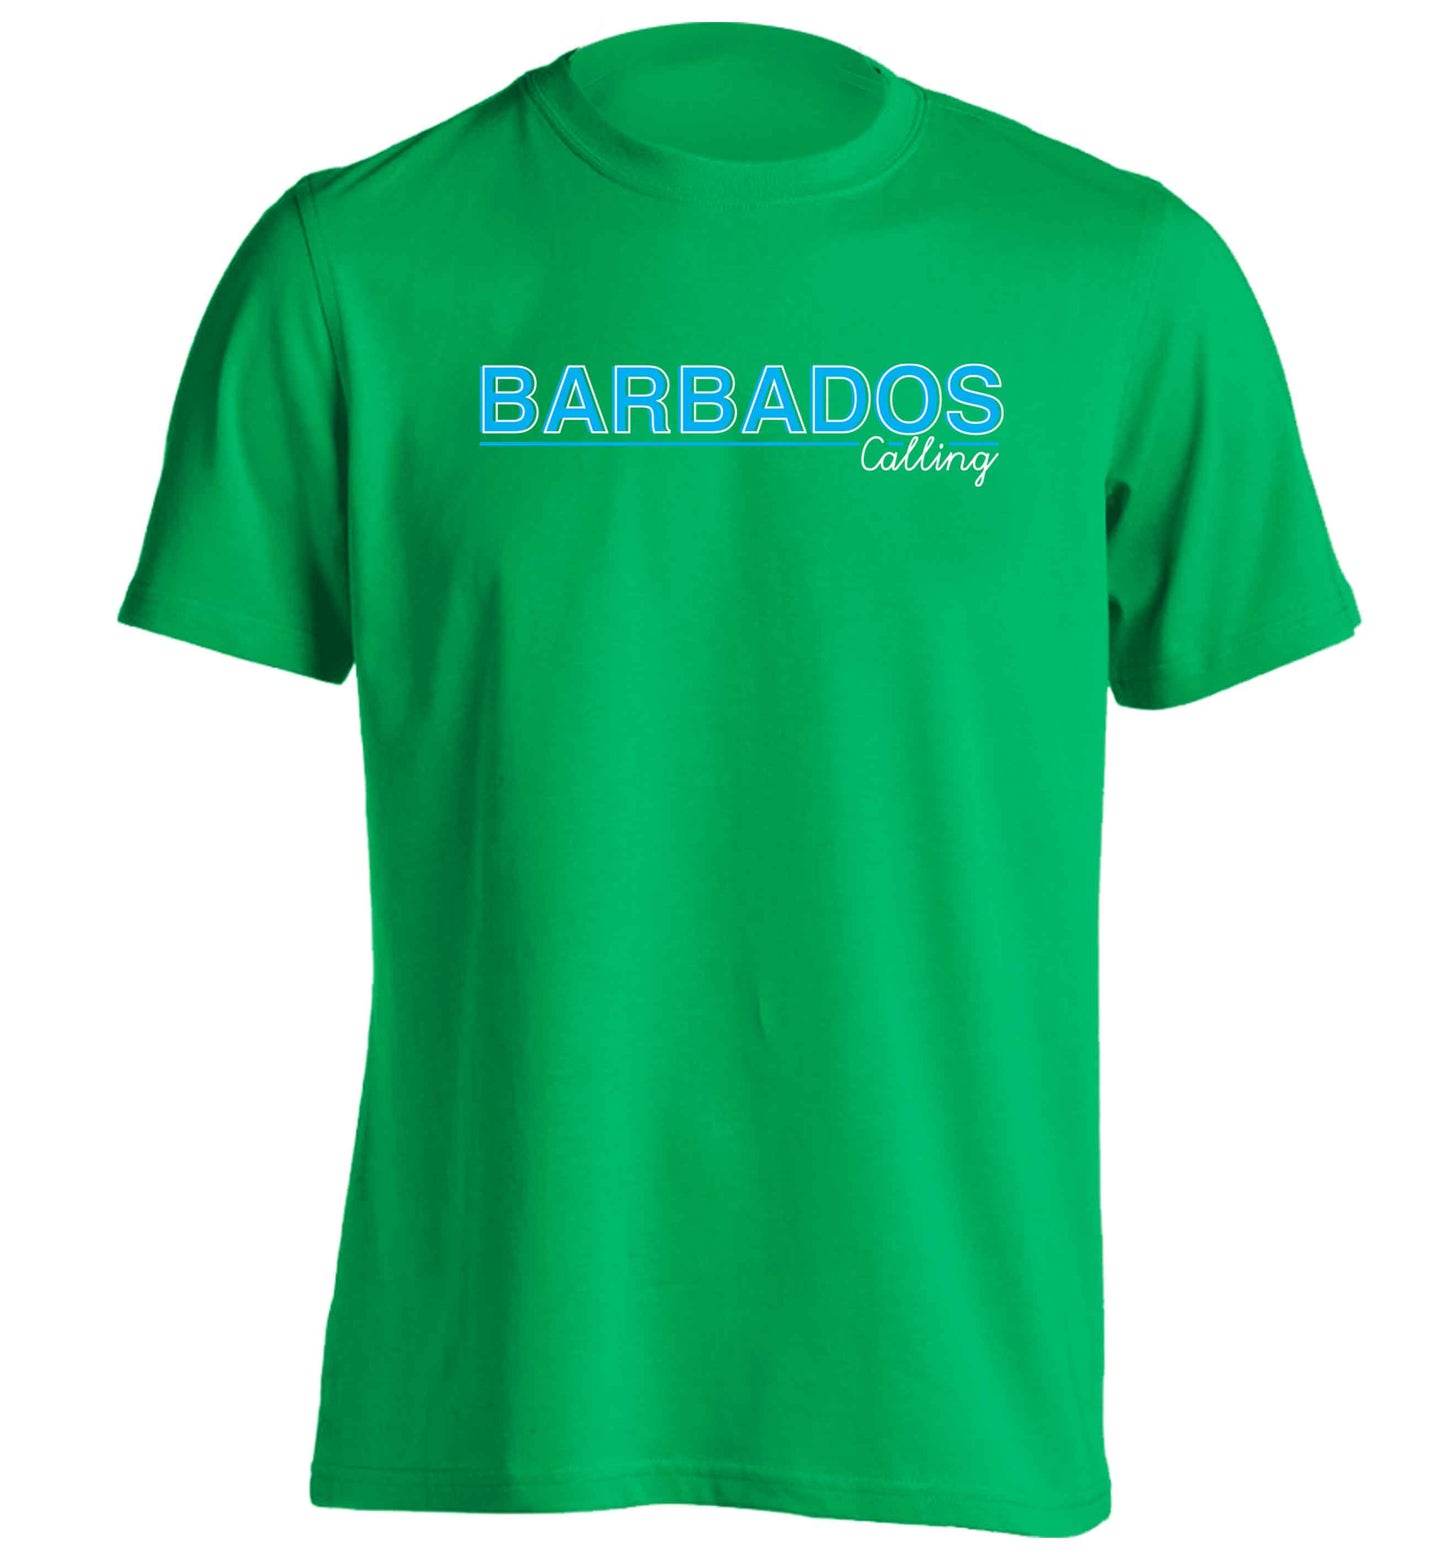 Barbados calling adults unisex green Tshirt 2XL